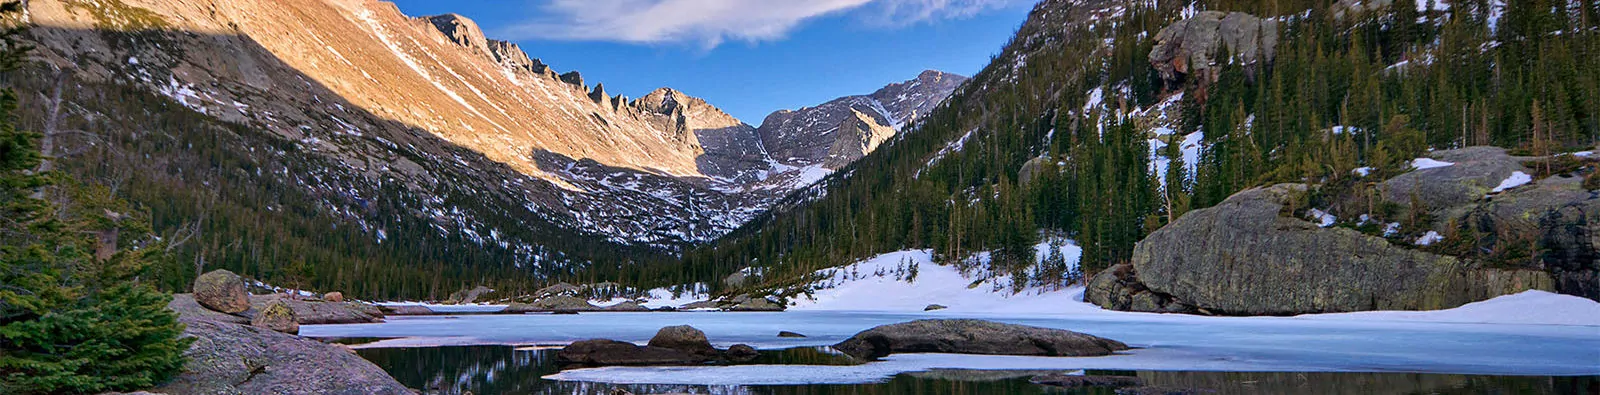 Visiting Rocky Mountain National Park in the Winter - Wildland Trekking